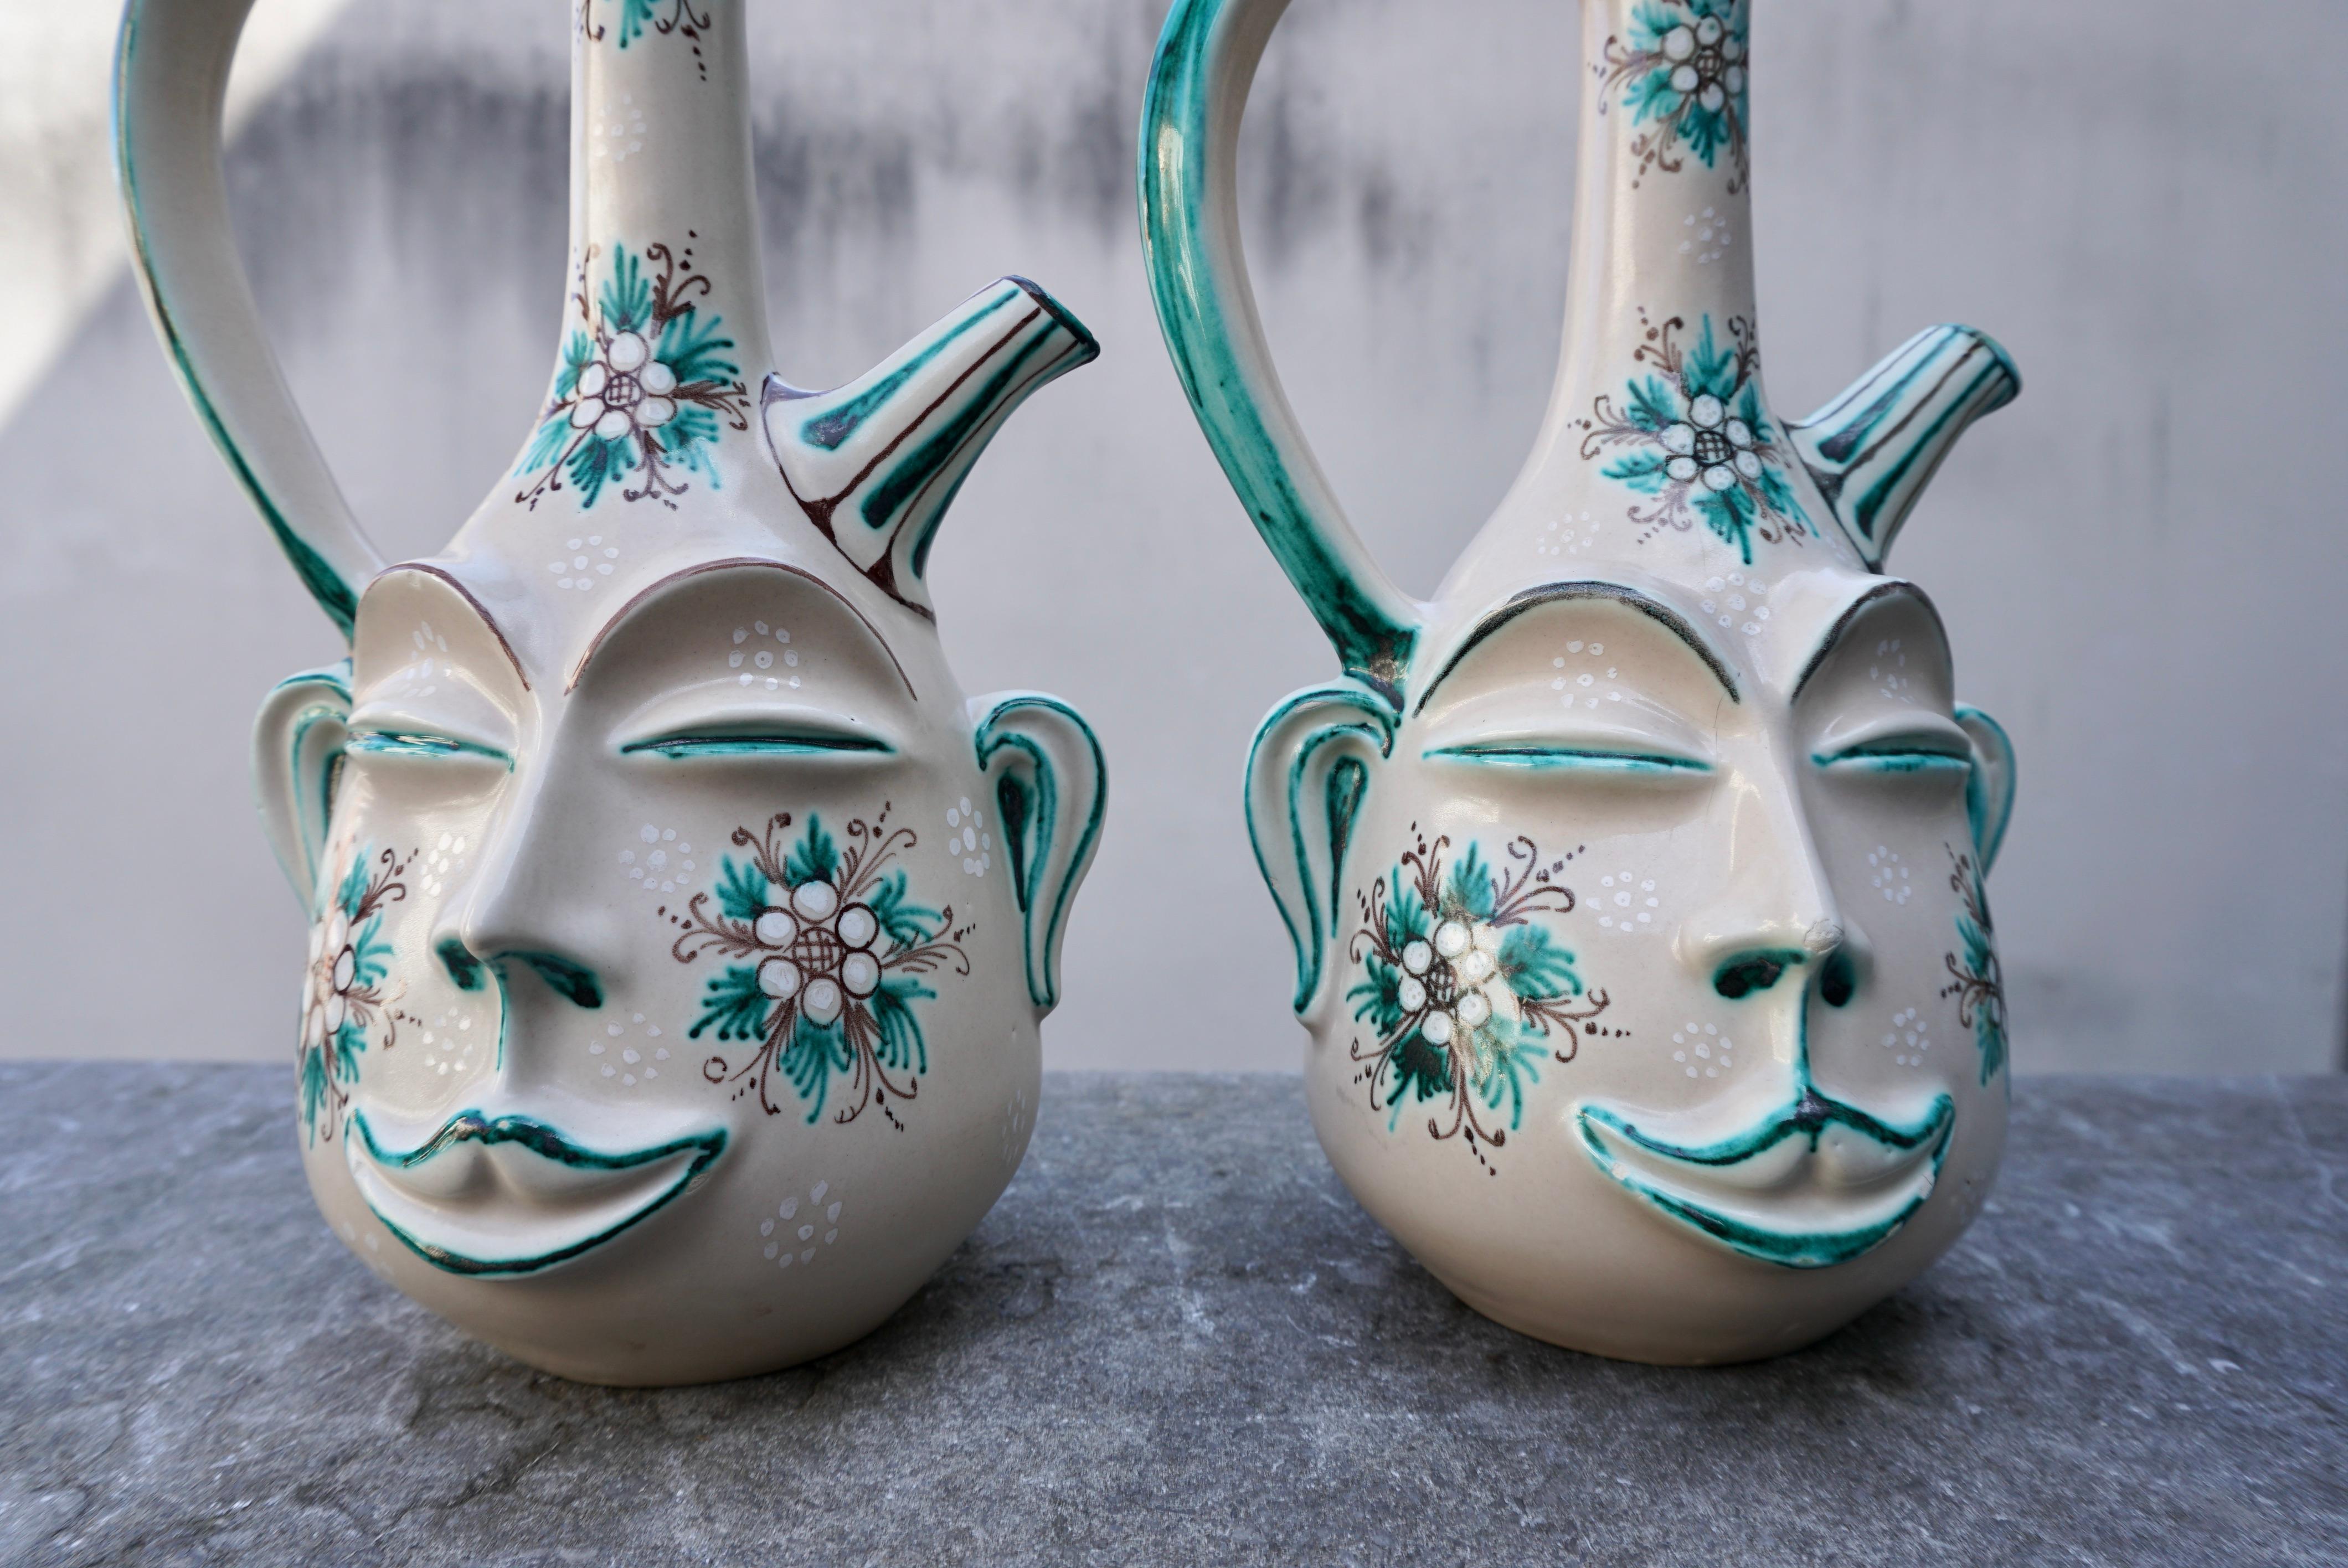 Ceramic Handmade Terracotta Pitcher Vase by Maga S. Stefano, Sicily 1970 For Sale